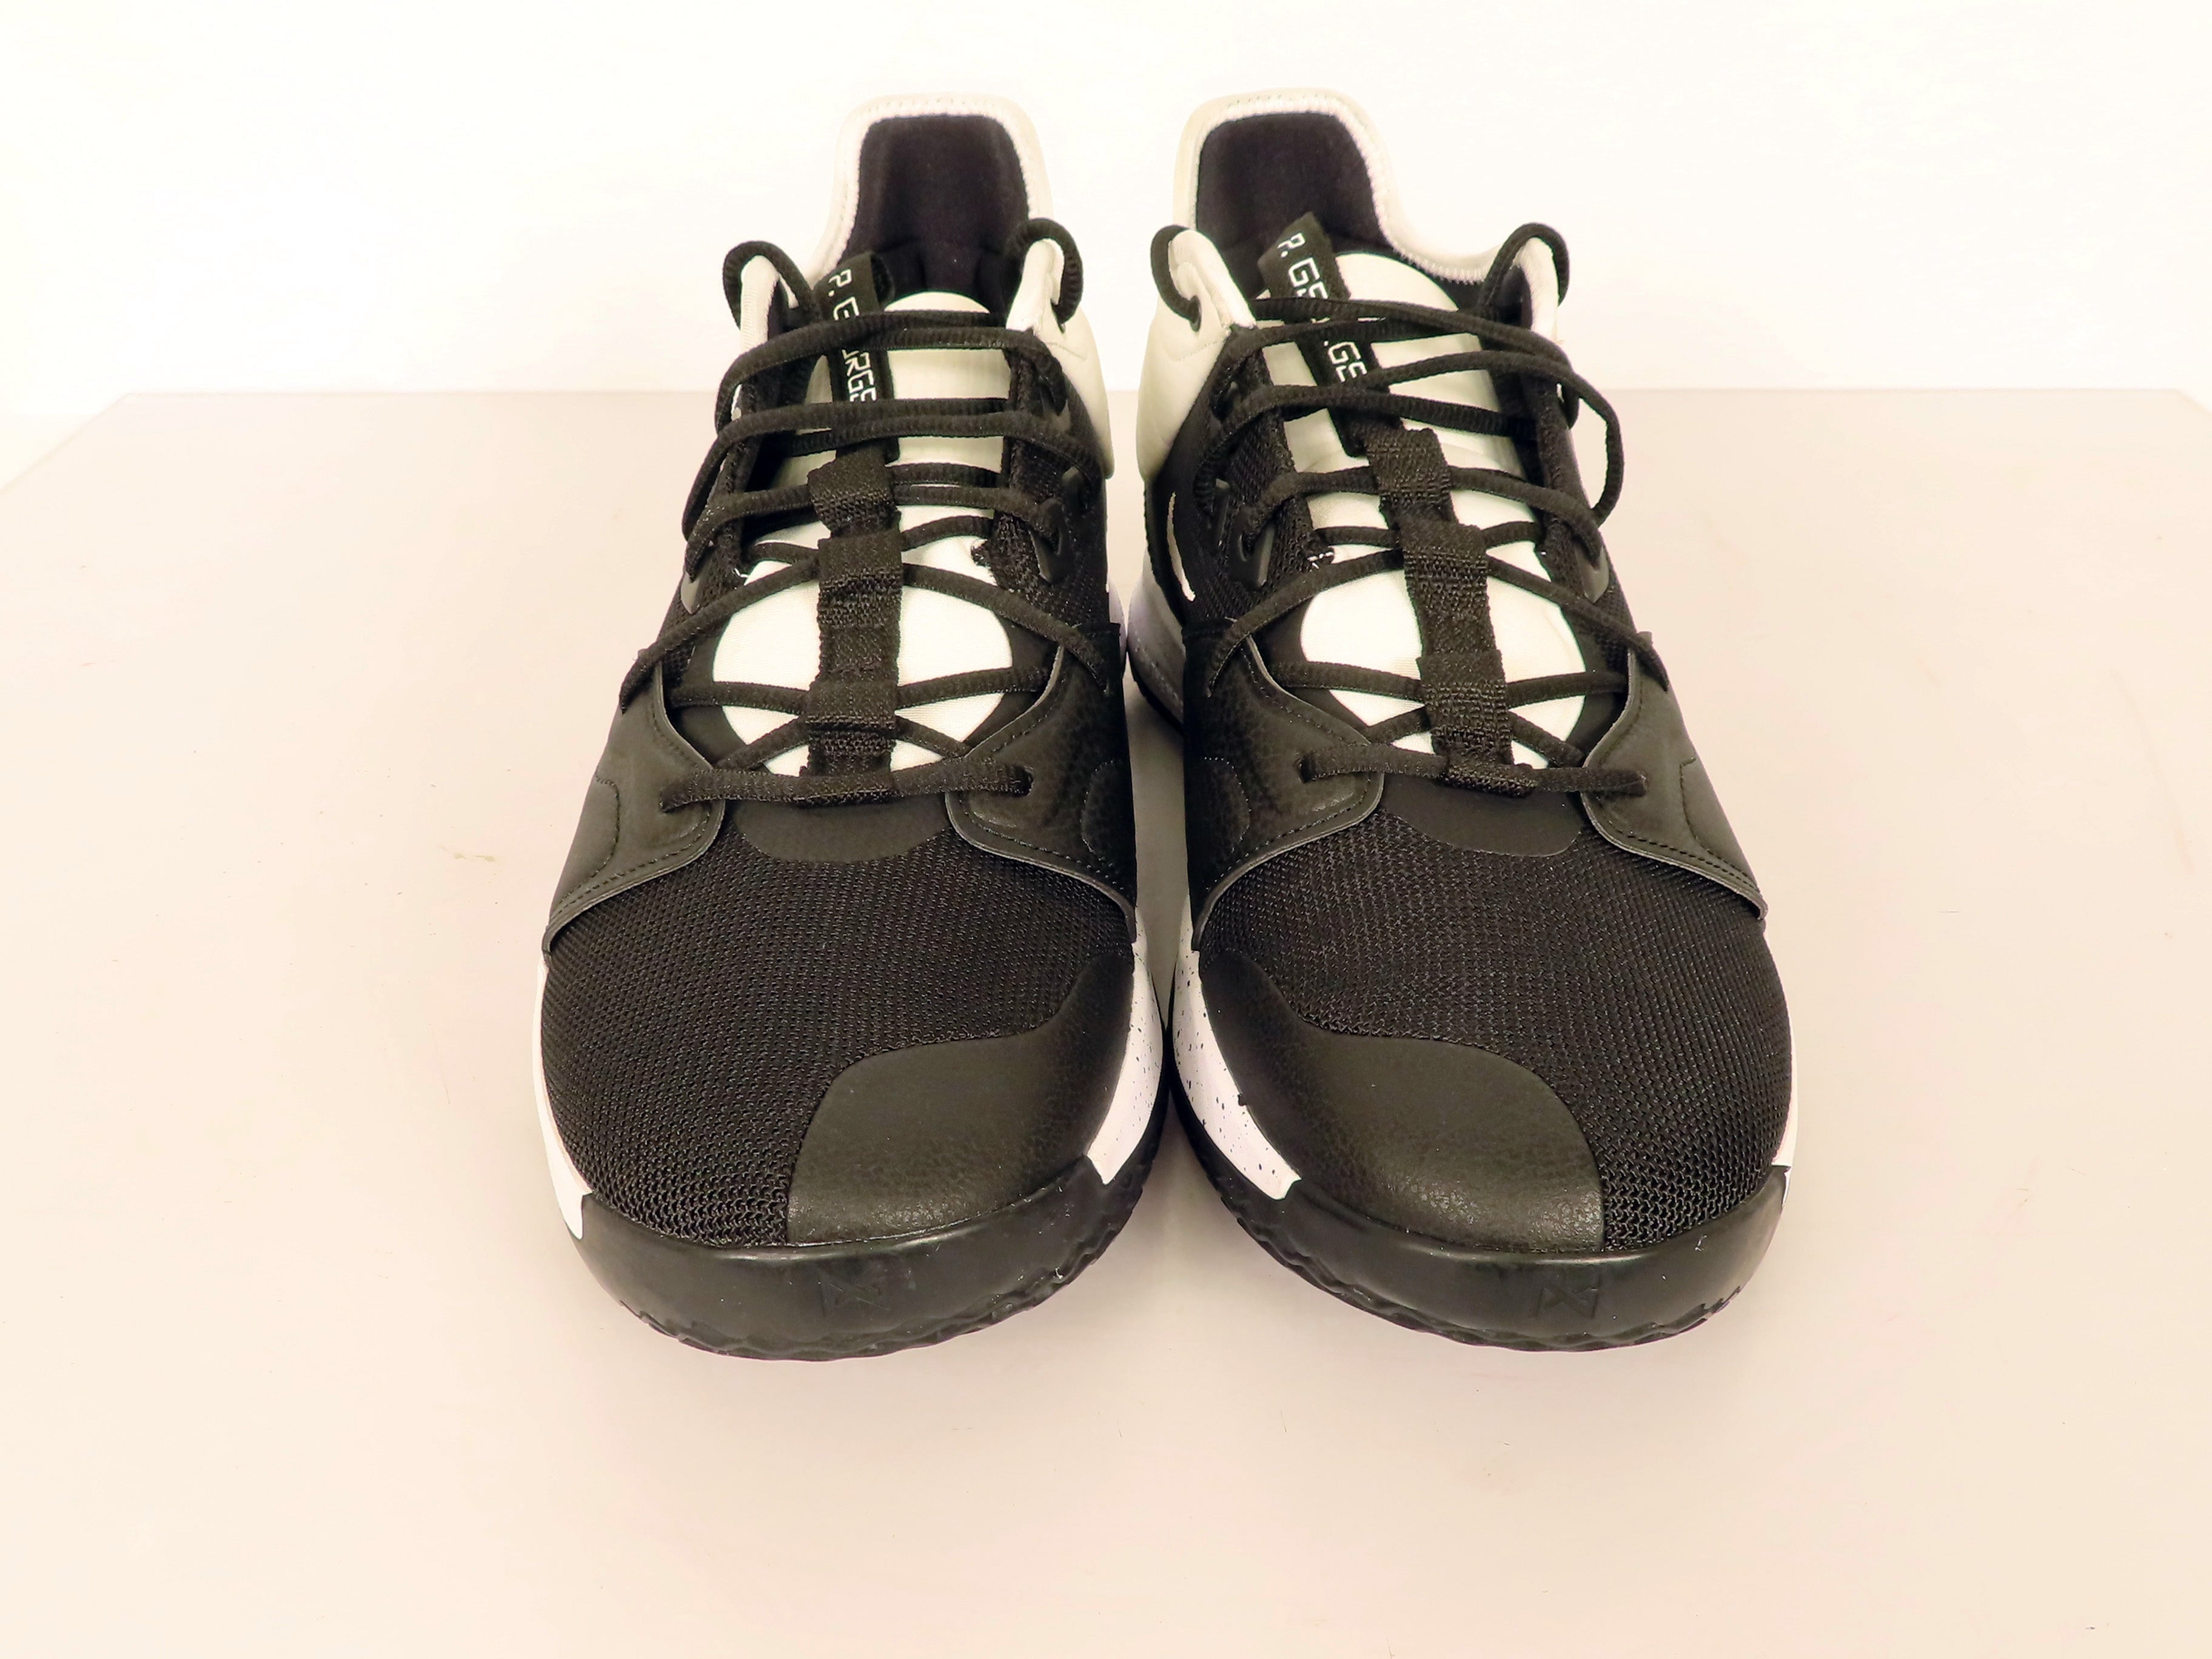 Nike PG 3 Black Basketball Shoes Men's Size 15